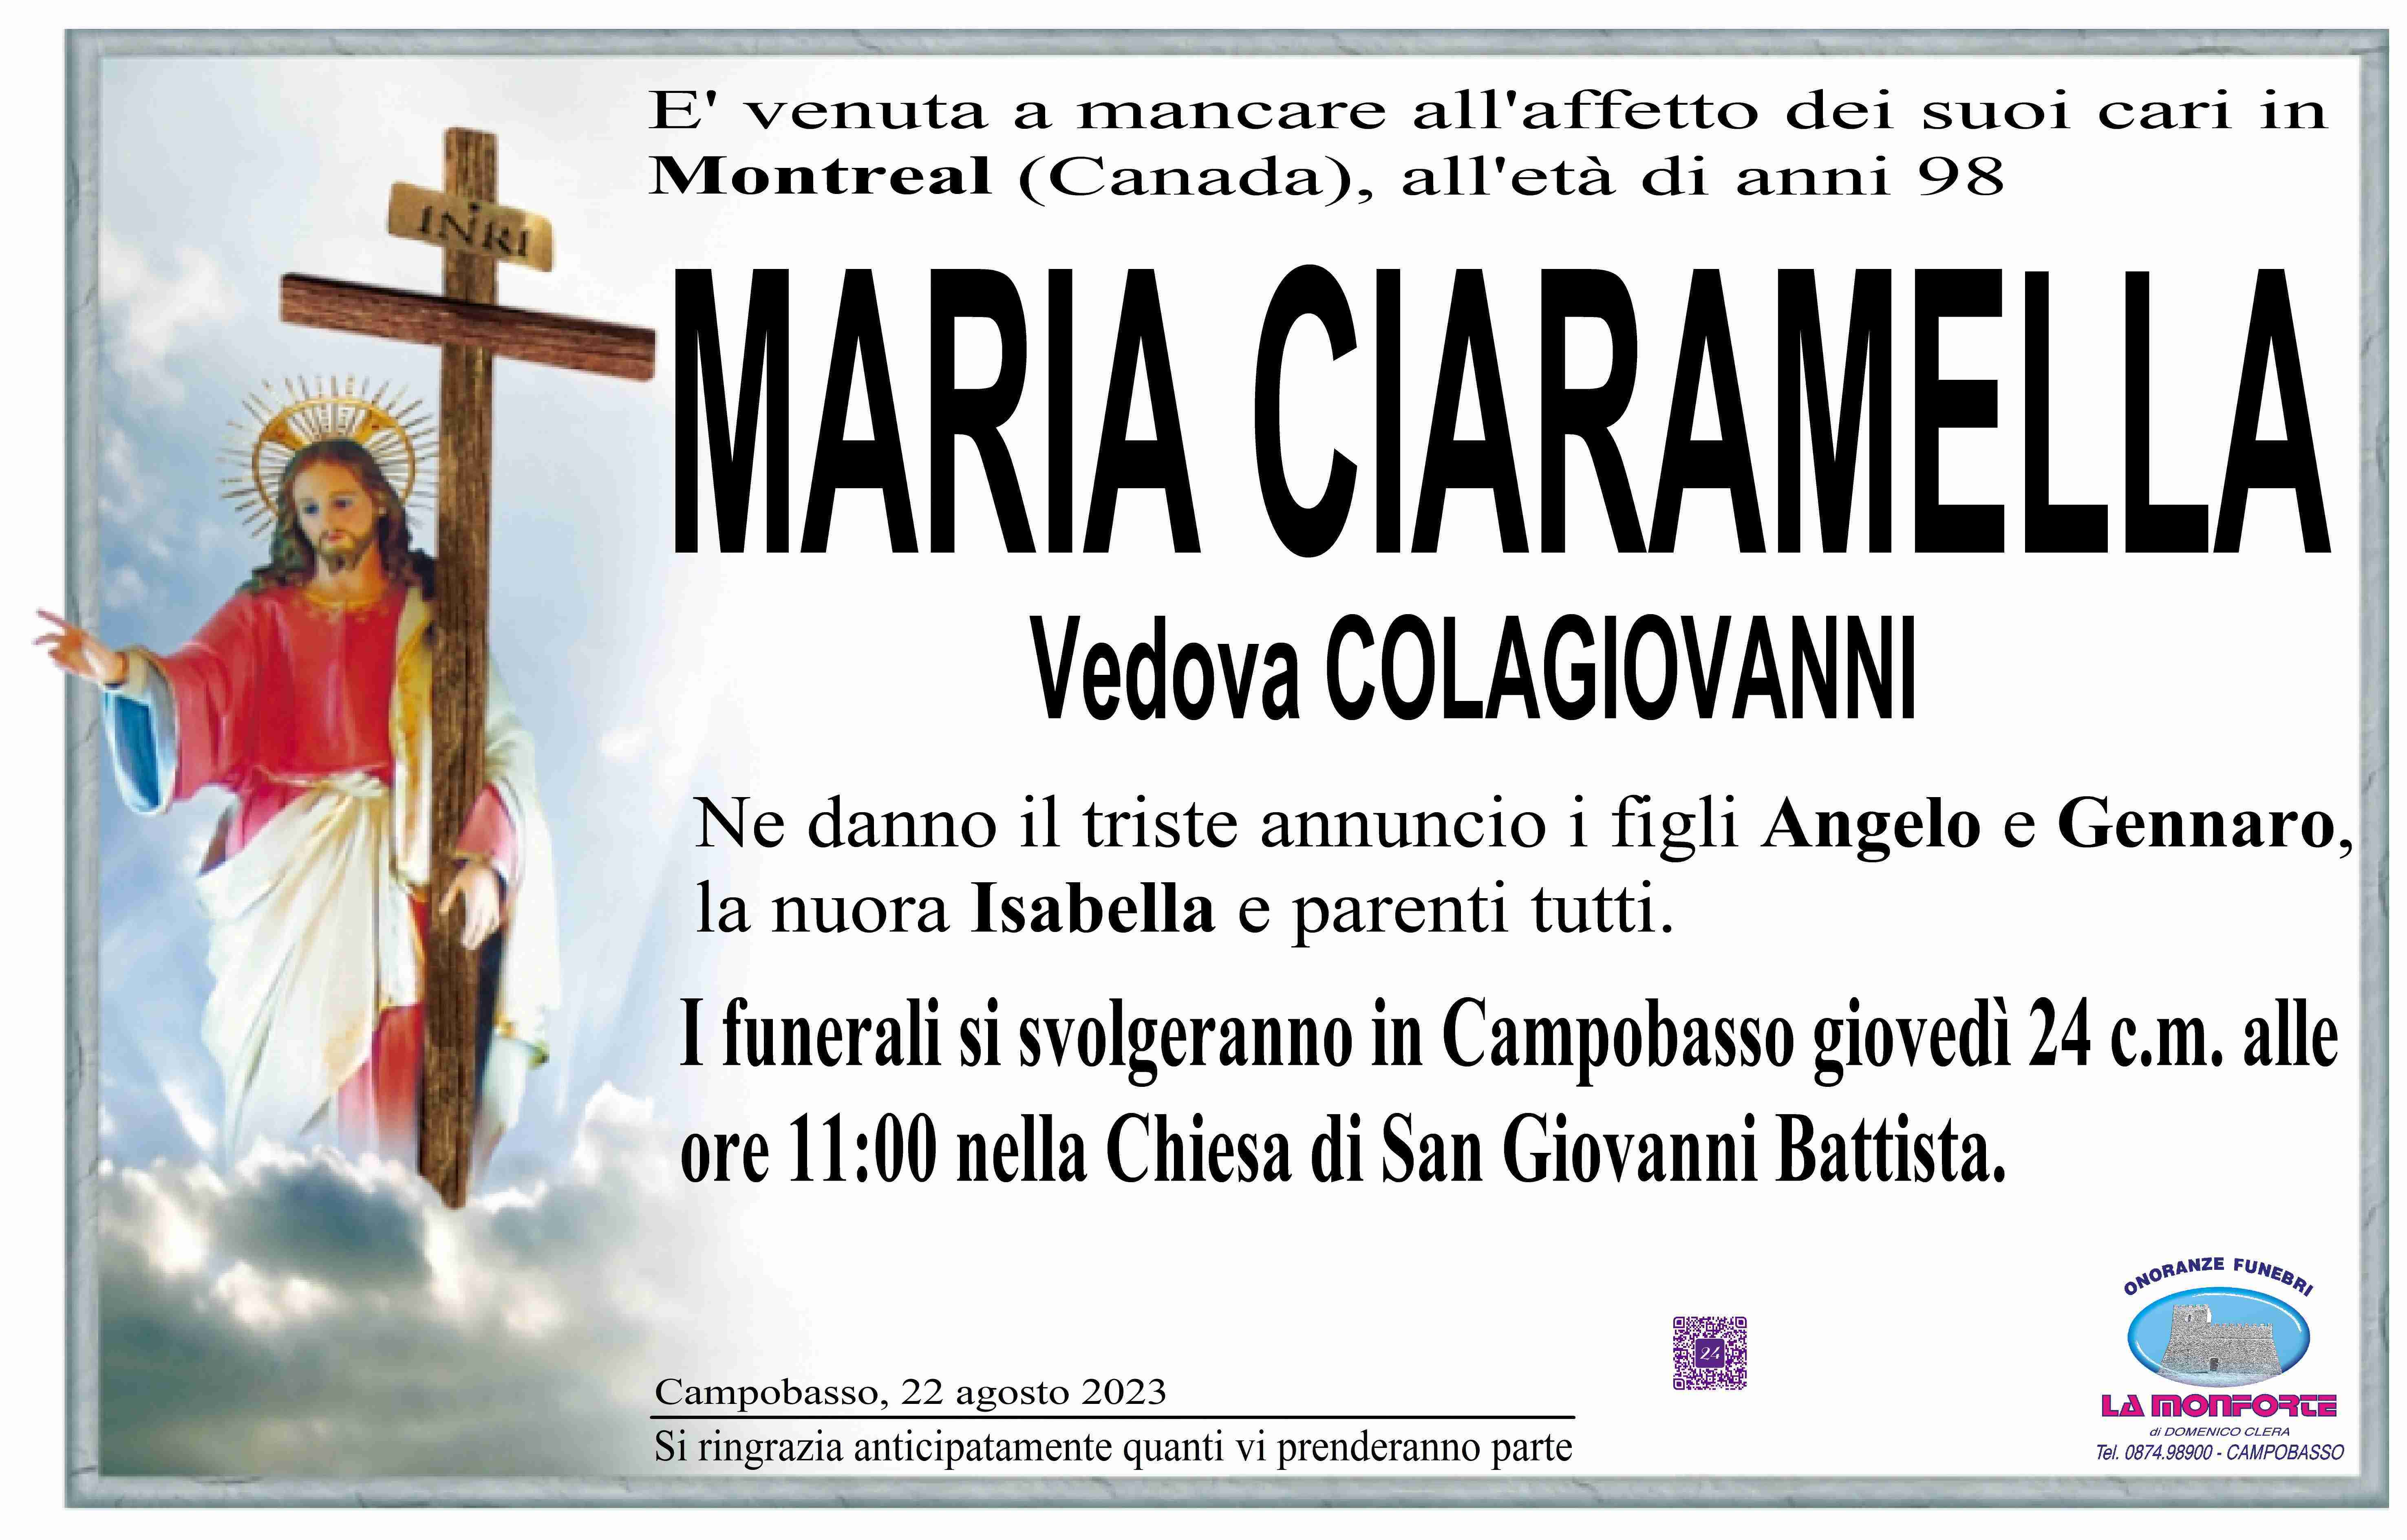 Maria Ciaramella